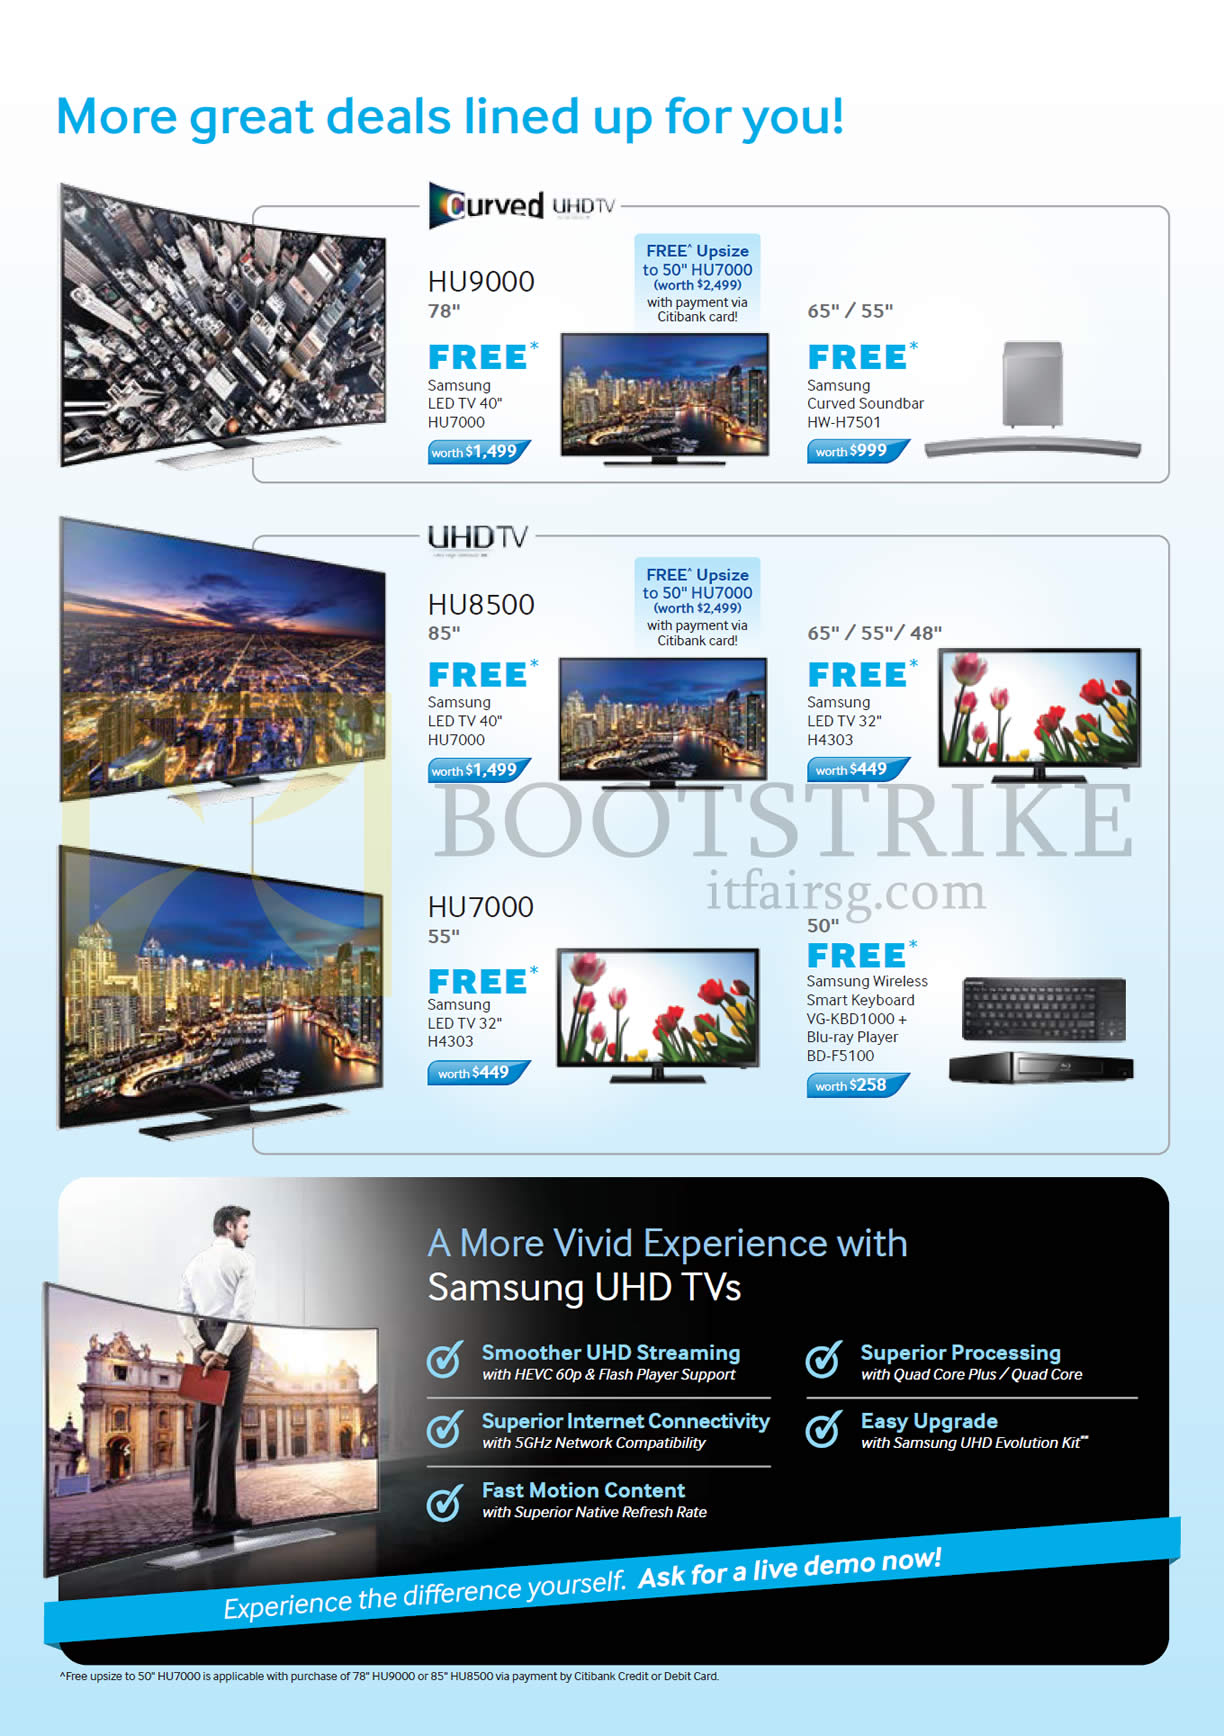 SITEX 2014 price list image brochure of Samsung TV Audio House (No Prices) HU9000, HU8500, HU7000